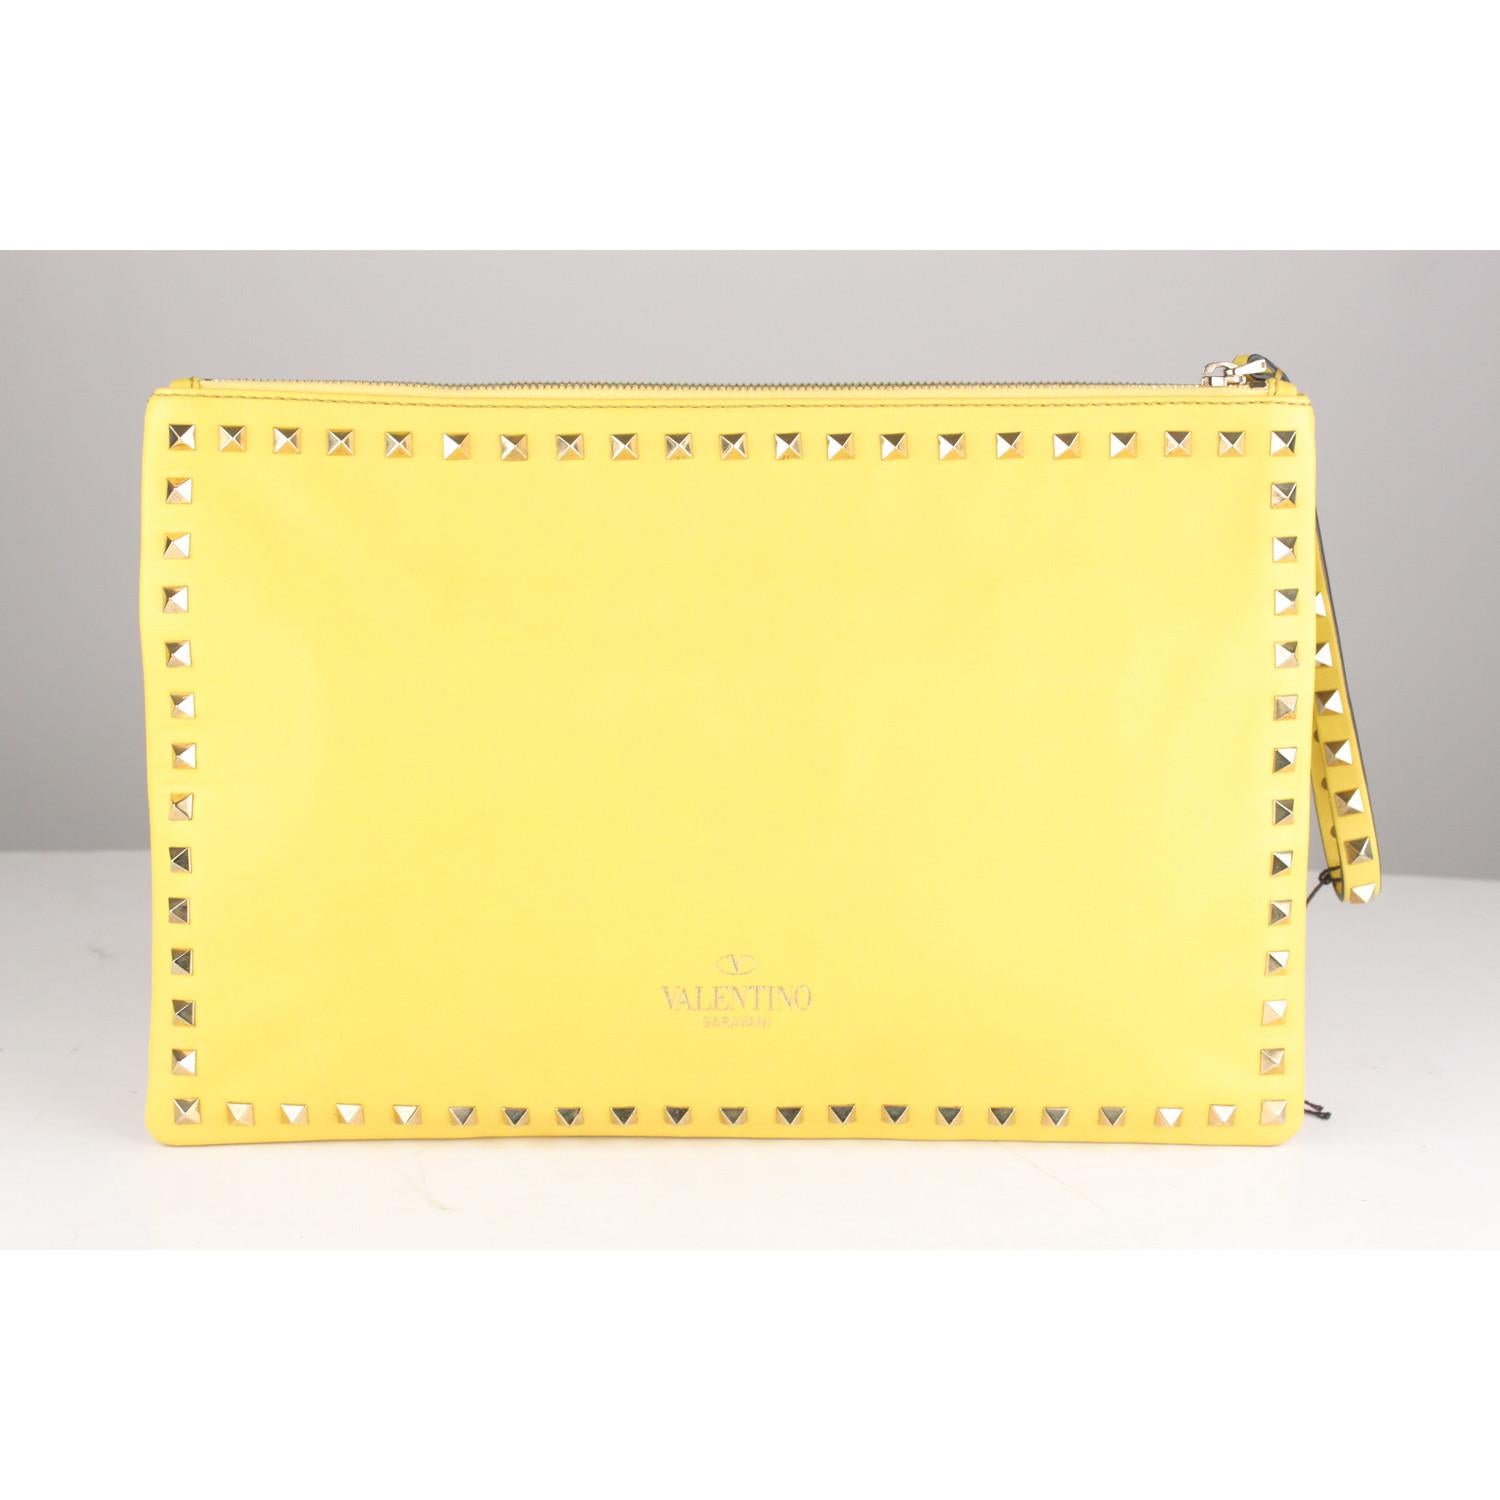 Valentino Yellow Leather Studded Rockstud Large Clutch Wrist Bag 2